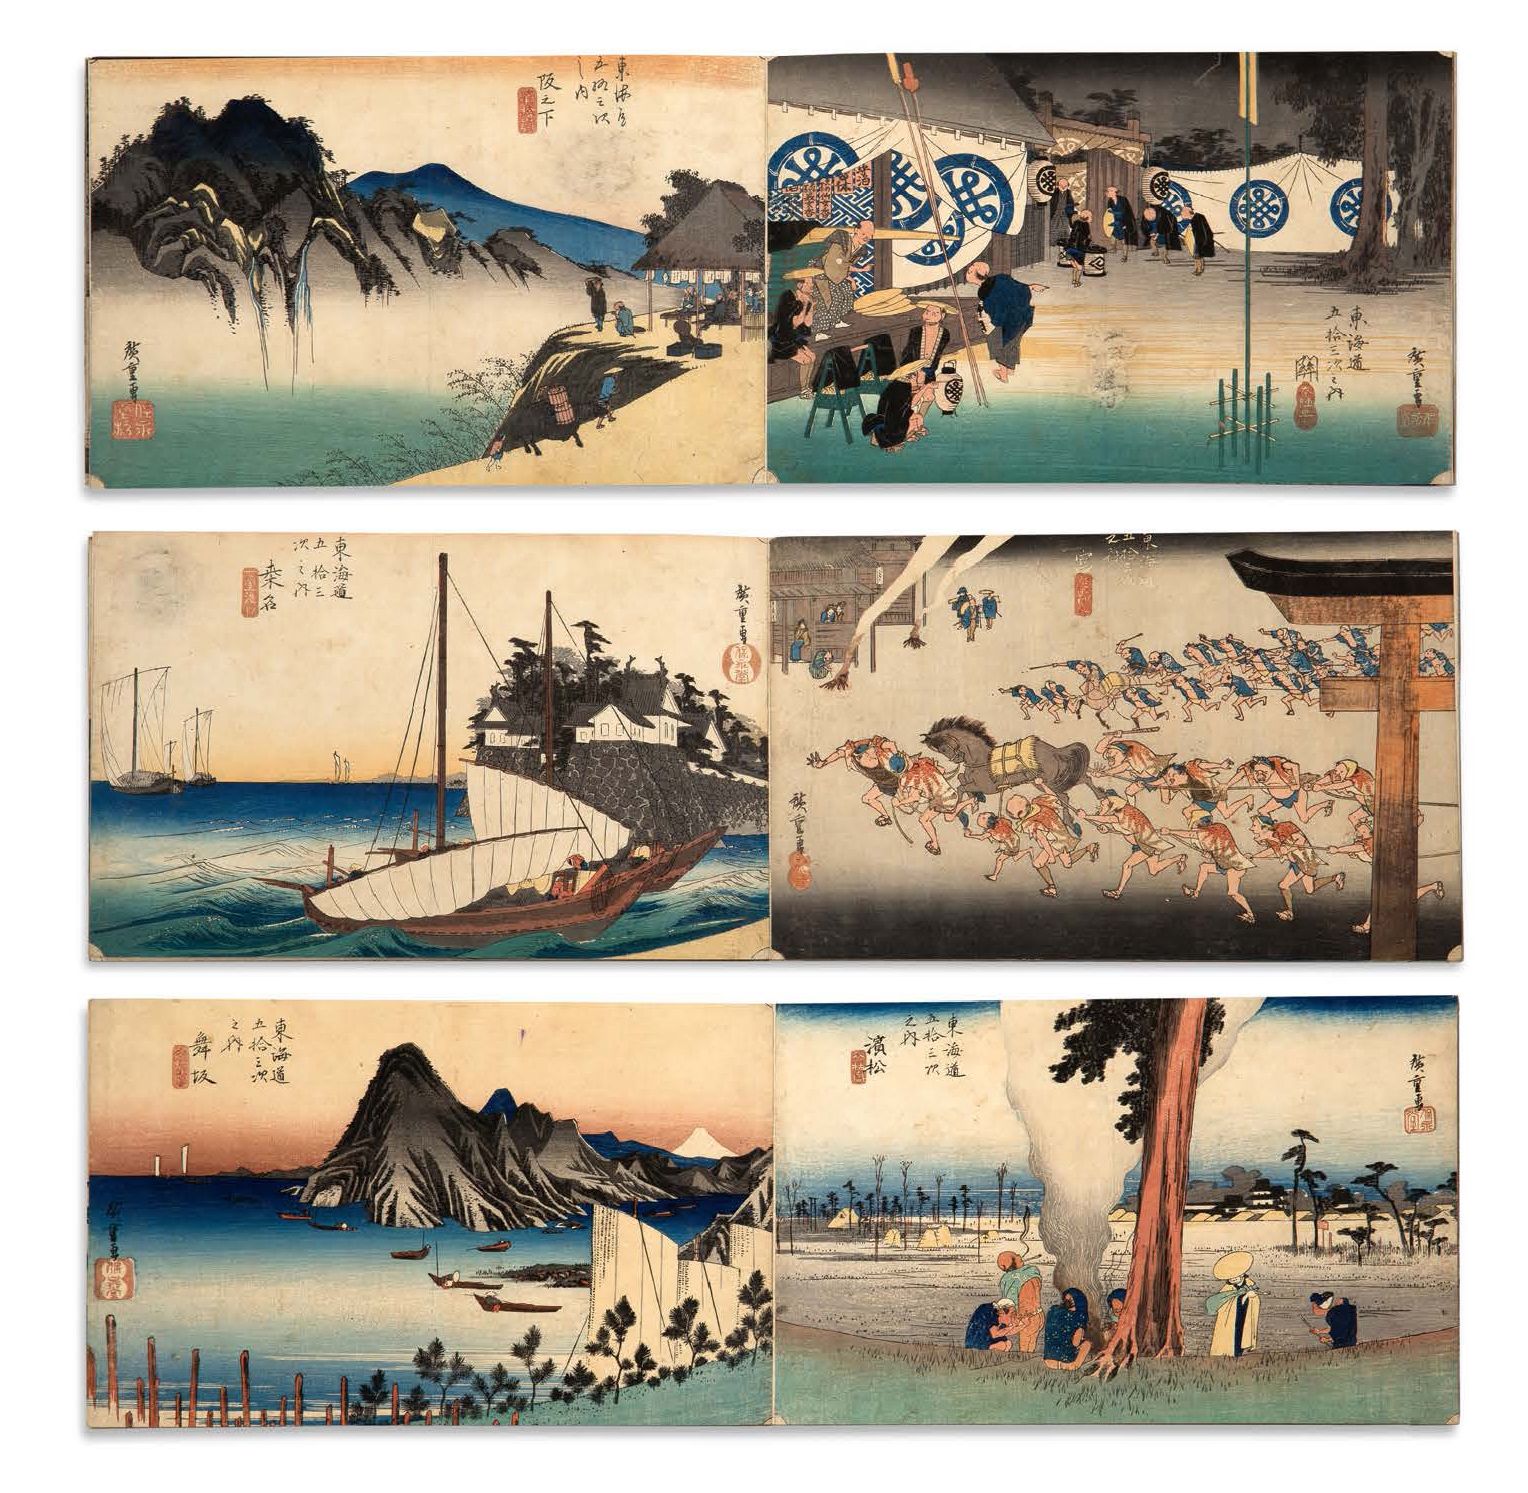 JAPON XIXe SIÈCLE HIROSHIGE (1797-1858): "The Fifty-three Stations of Tôkaidô", &hellip;